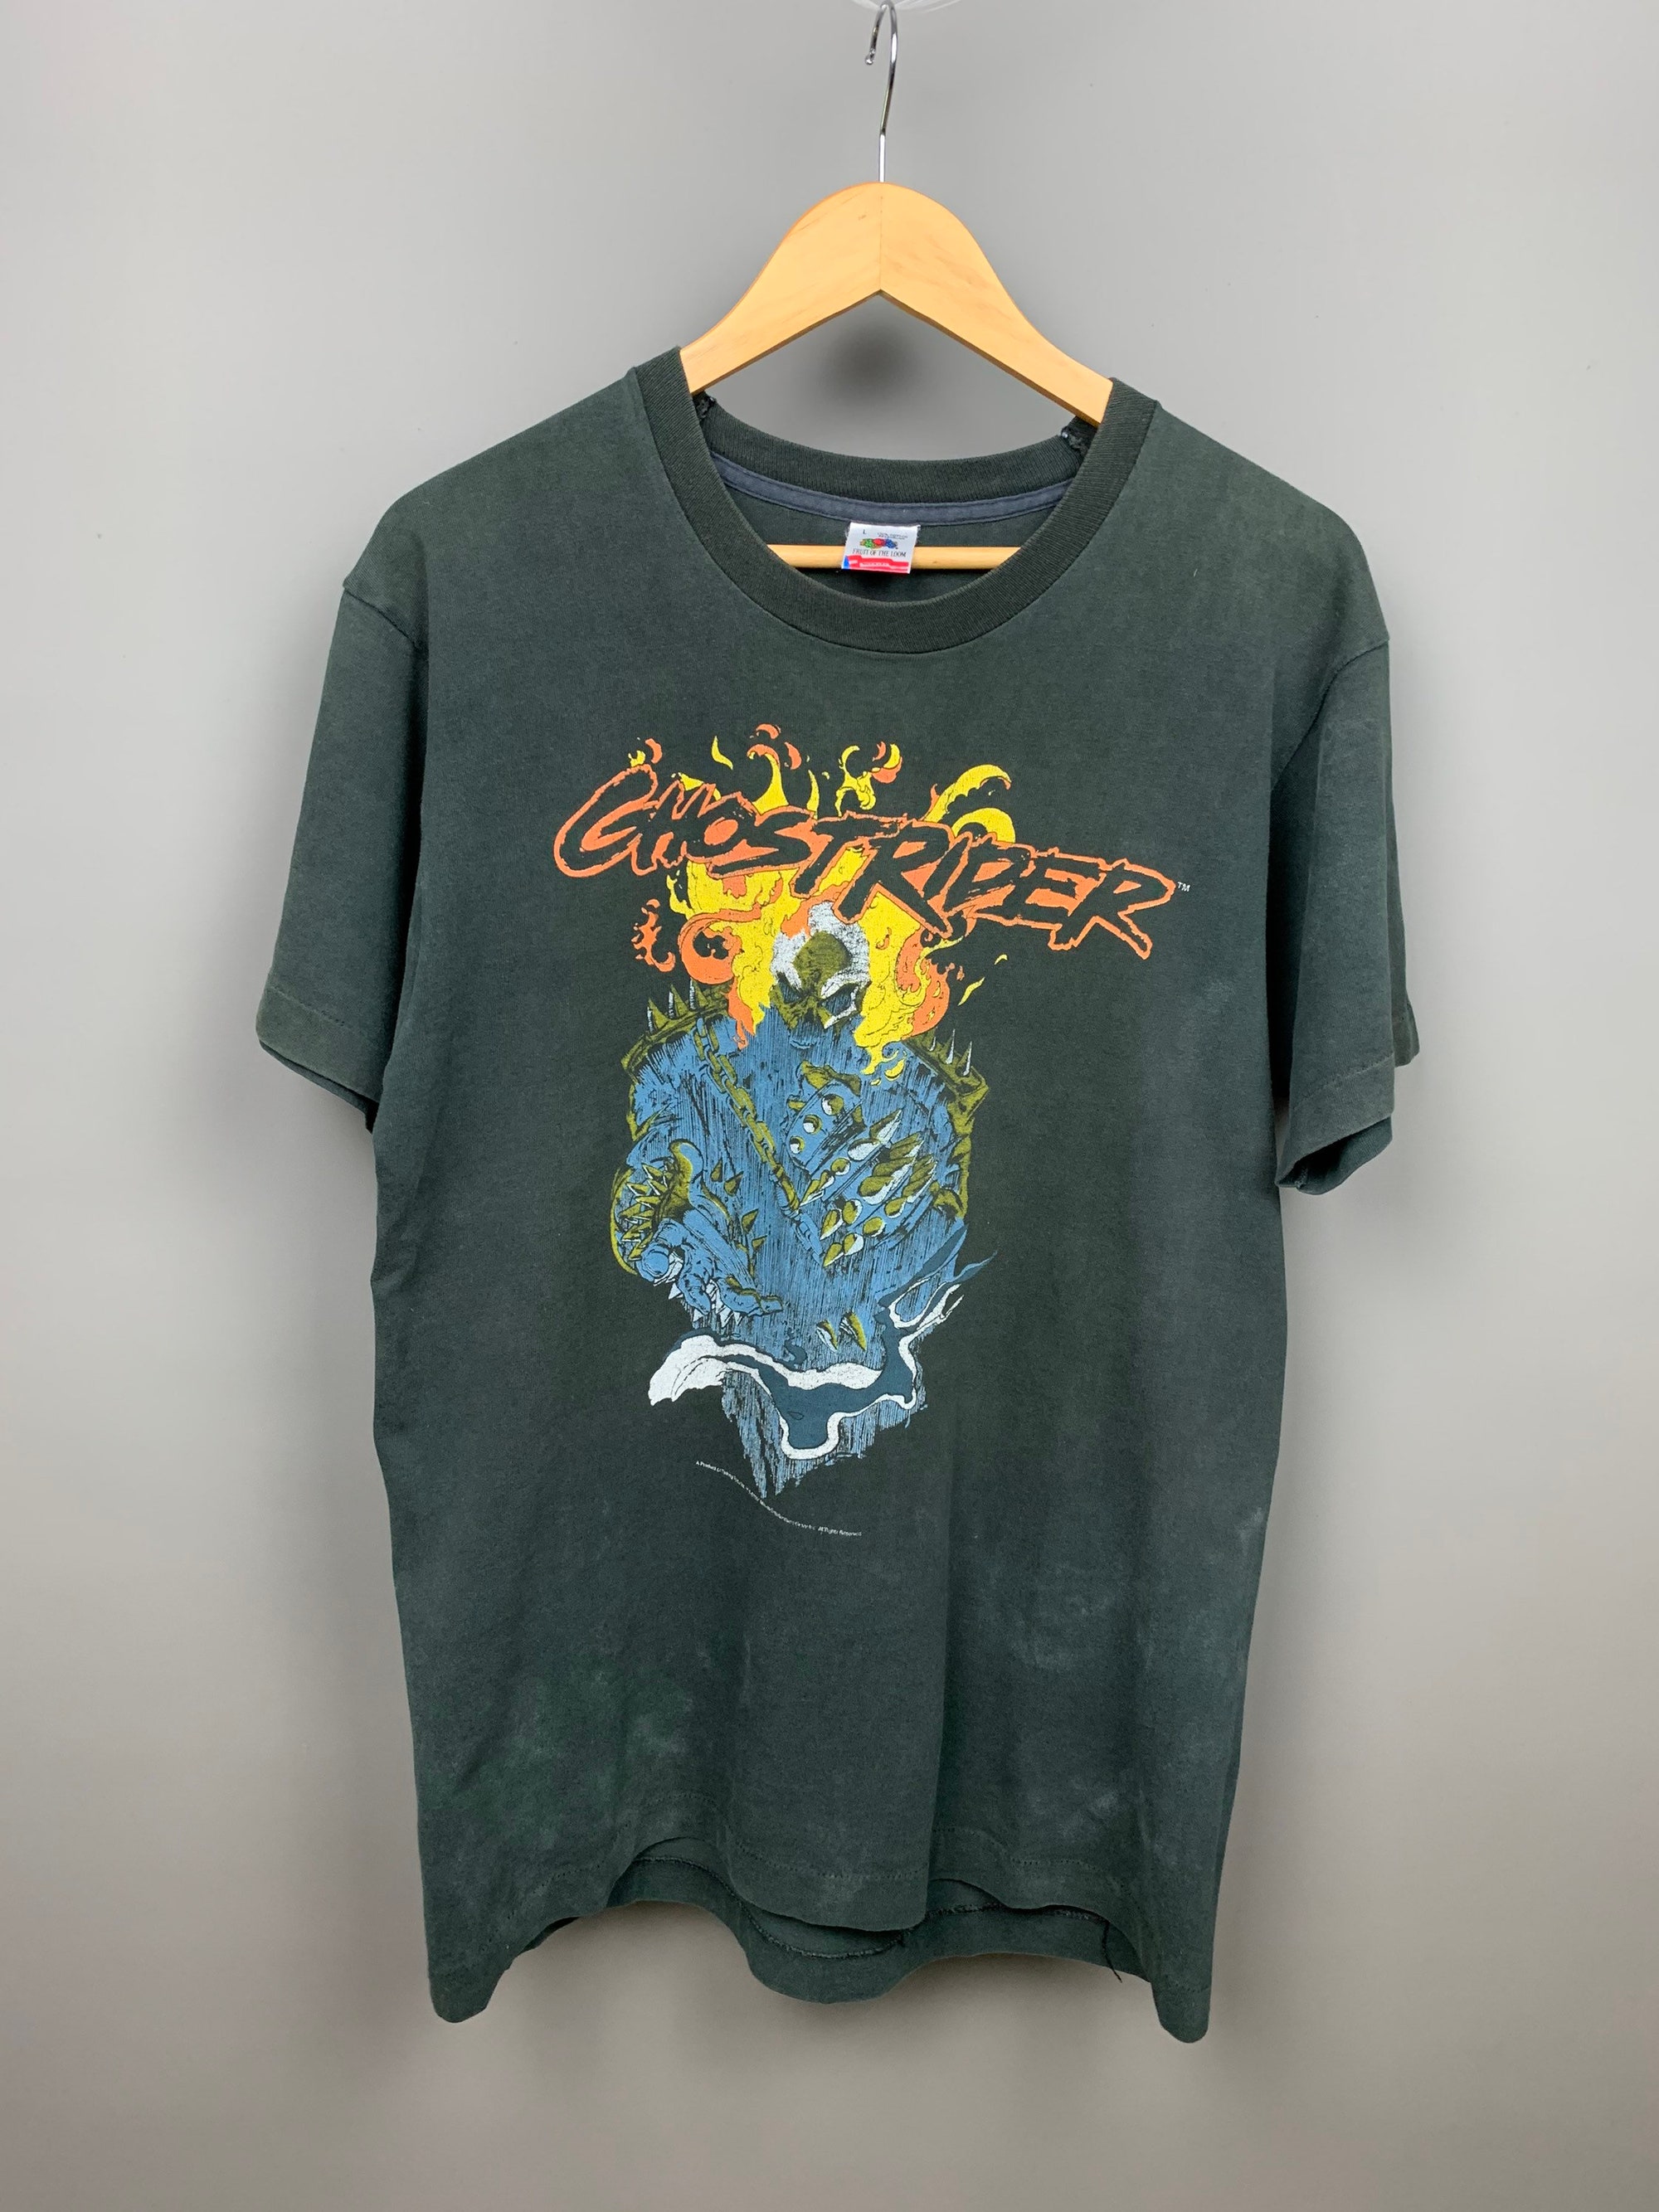 GHOSTRIDER 1991 Vintage MARVEL T-Shirt